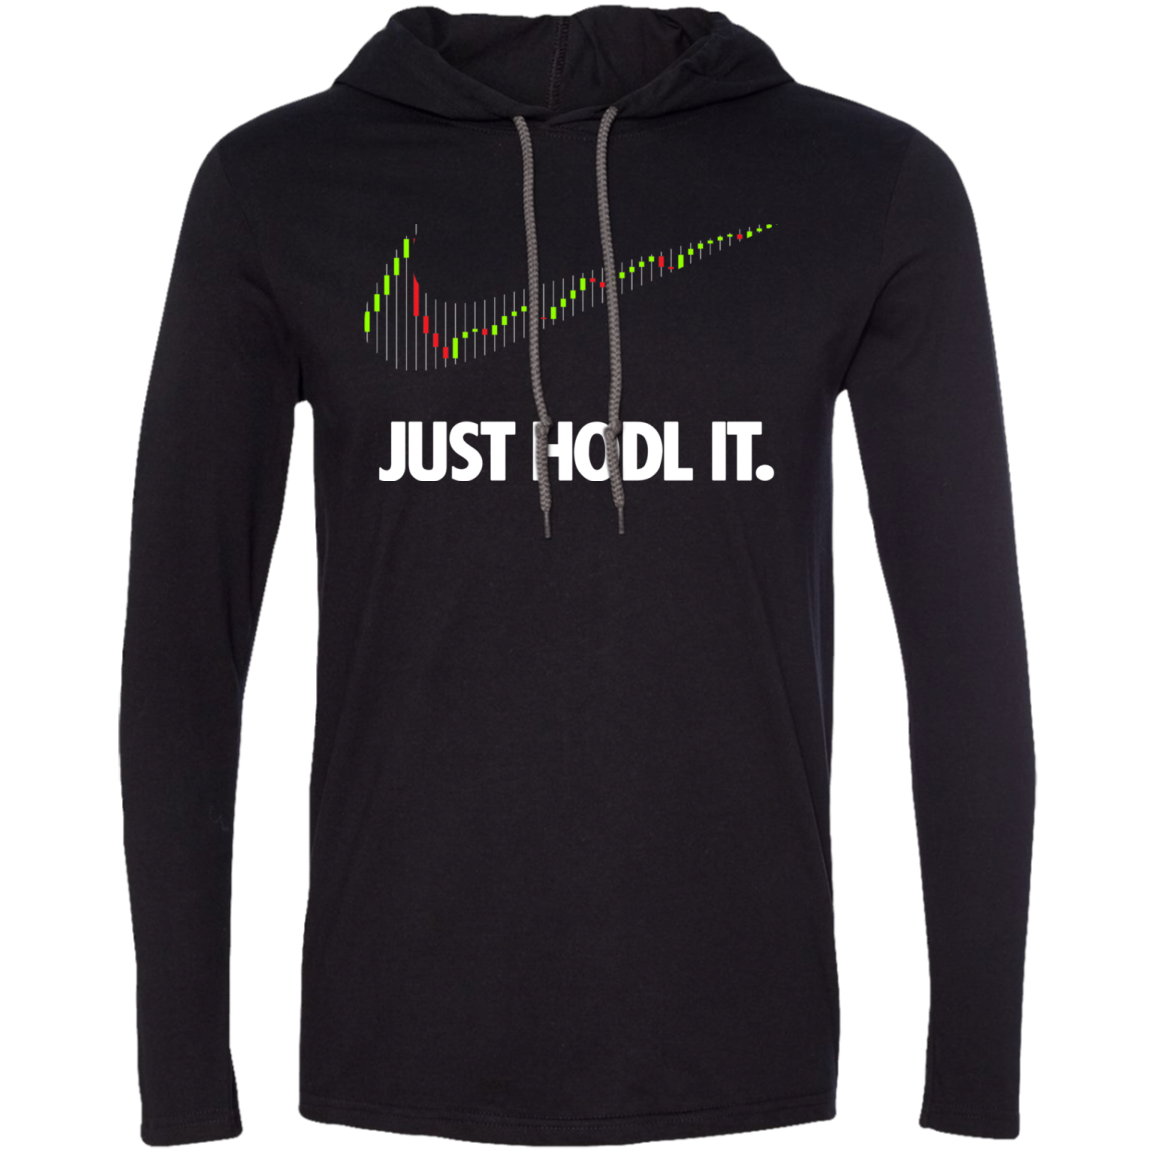 Just hodl it - Men's T-Shirt Hoodie TCP1607 Black/Dark Grey / S Official Crypto  Merch